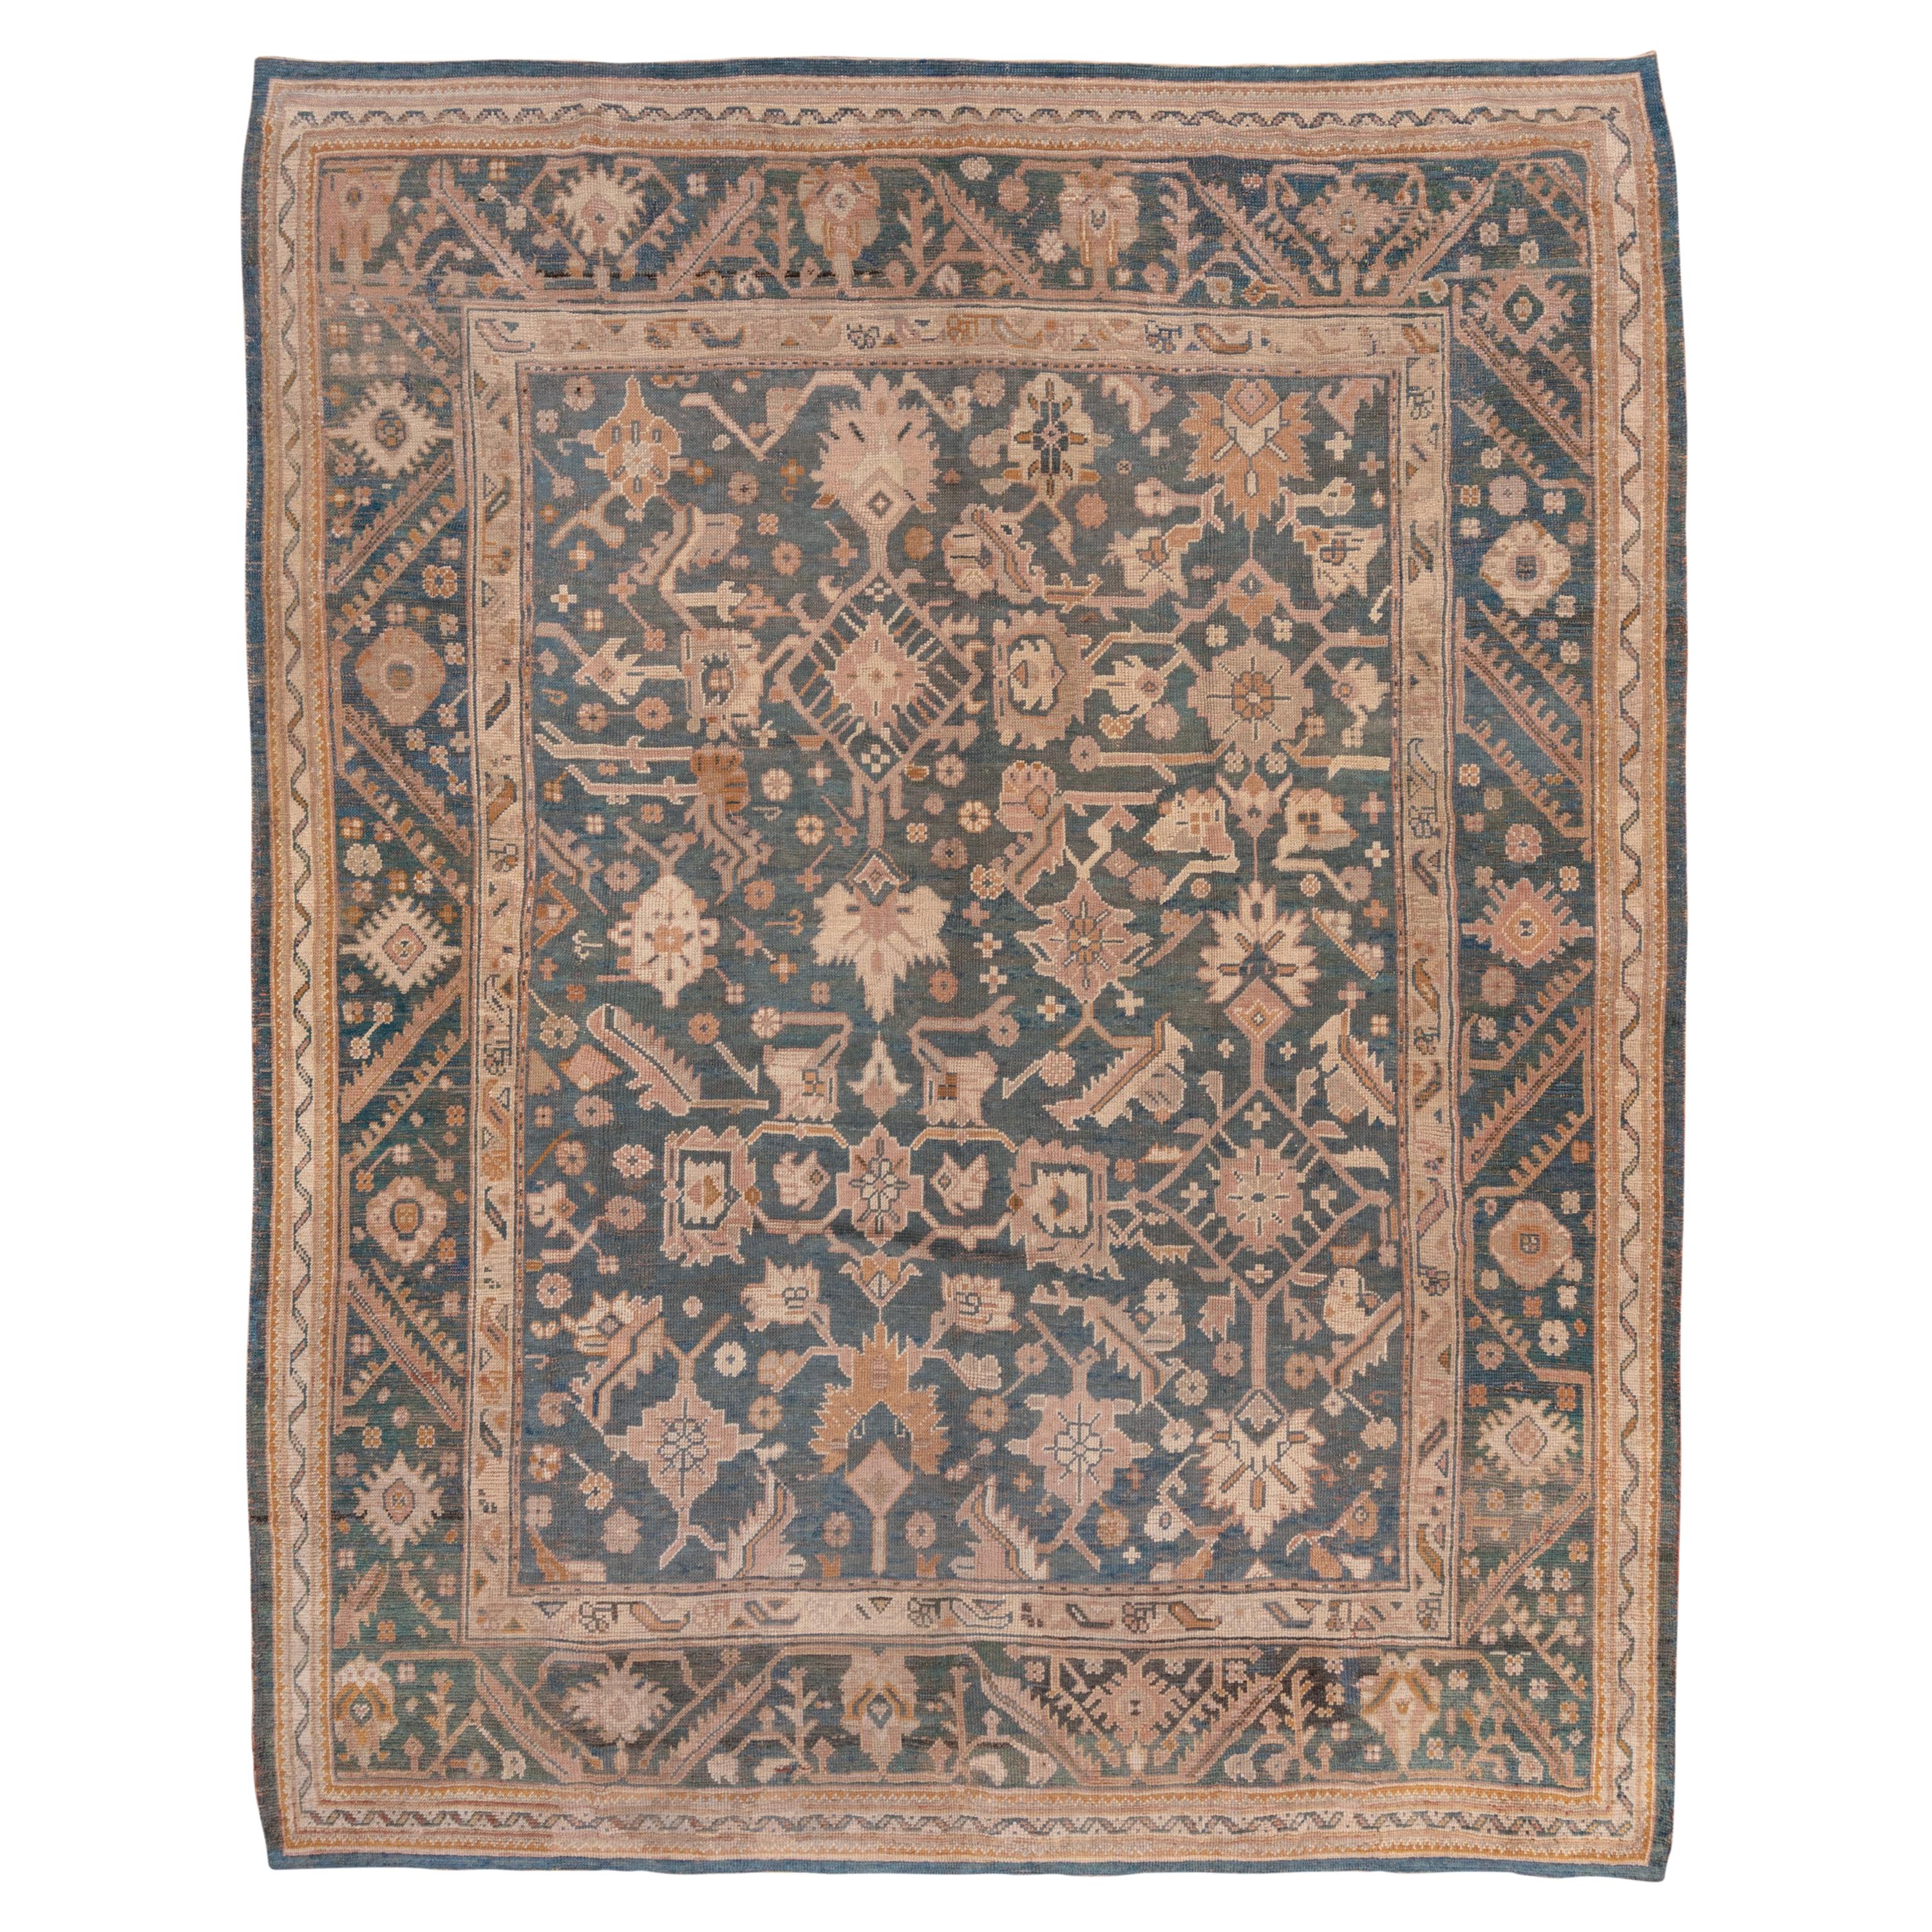 Antique Green Turkish Oushak Carpet, Allover Field, Green Palette